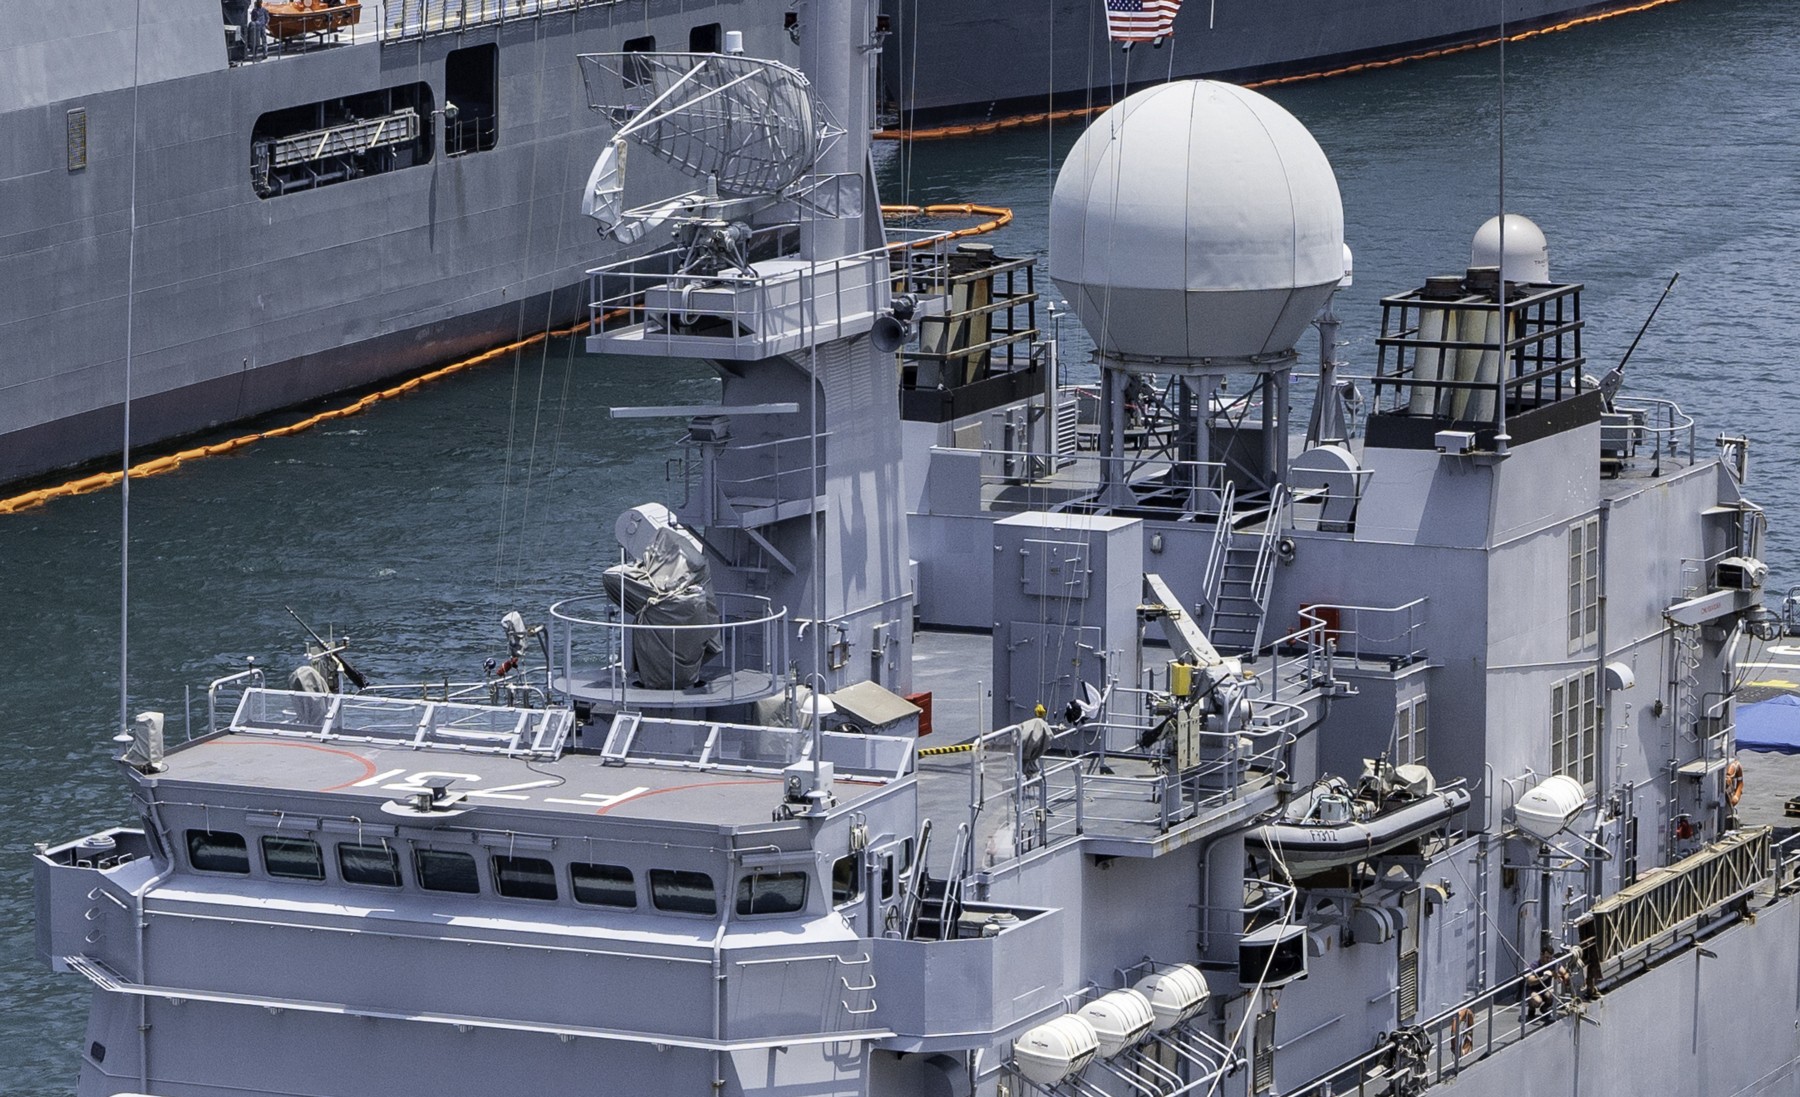 f-731 fs prairial floreal class frigate french navy marine nationale fregate surveillance 11a mast radar details